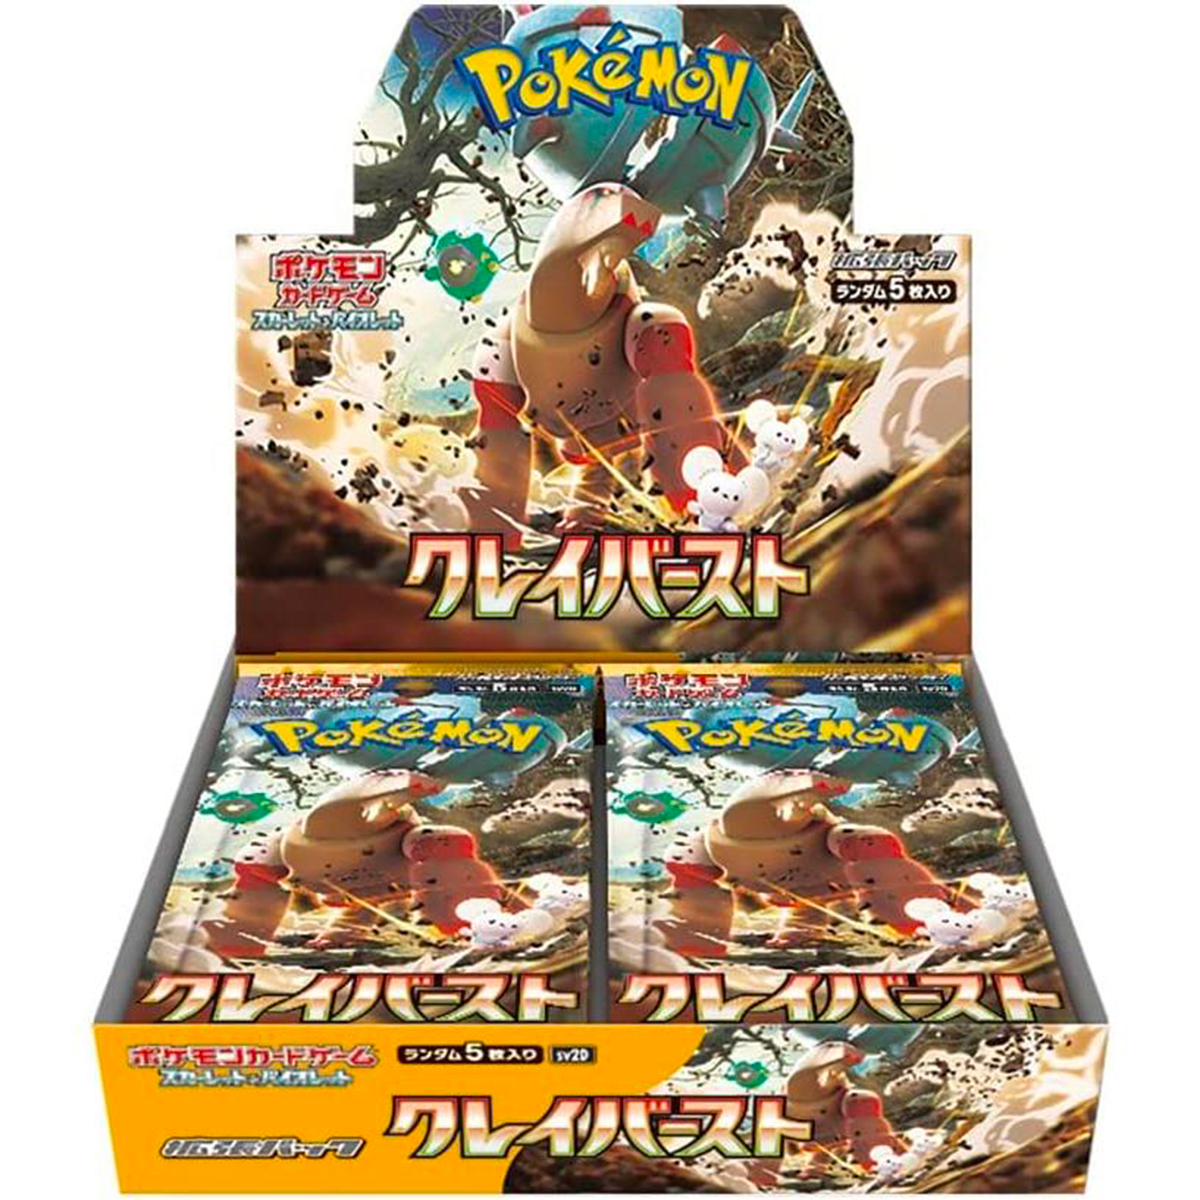 pokemon scarlet and violet clay burst sv2d - box 30 bustine (jap)